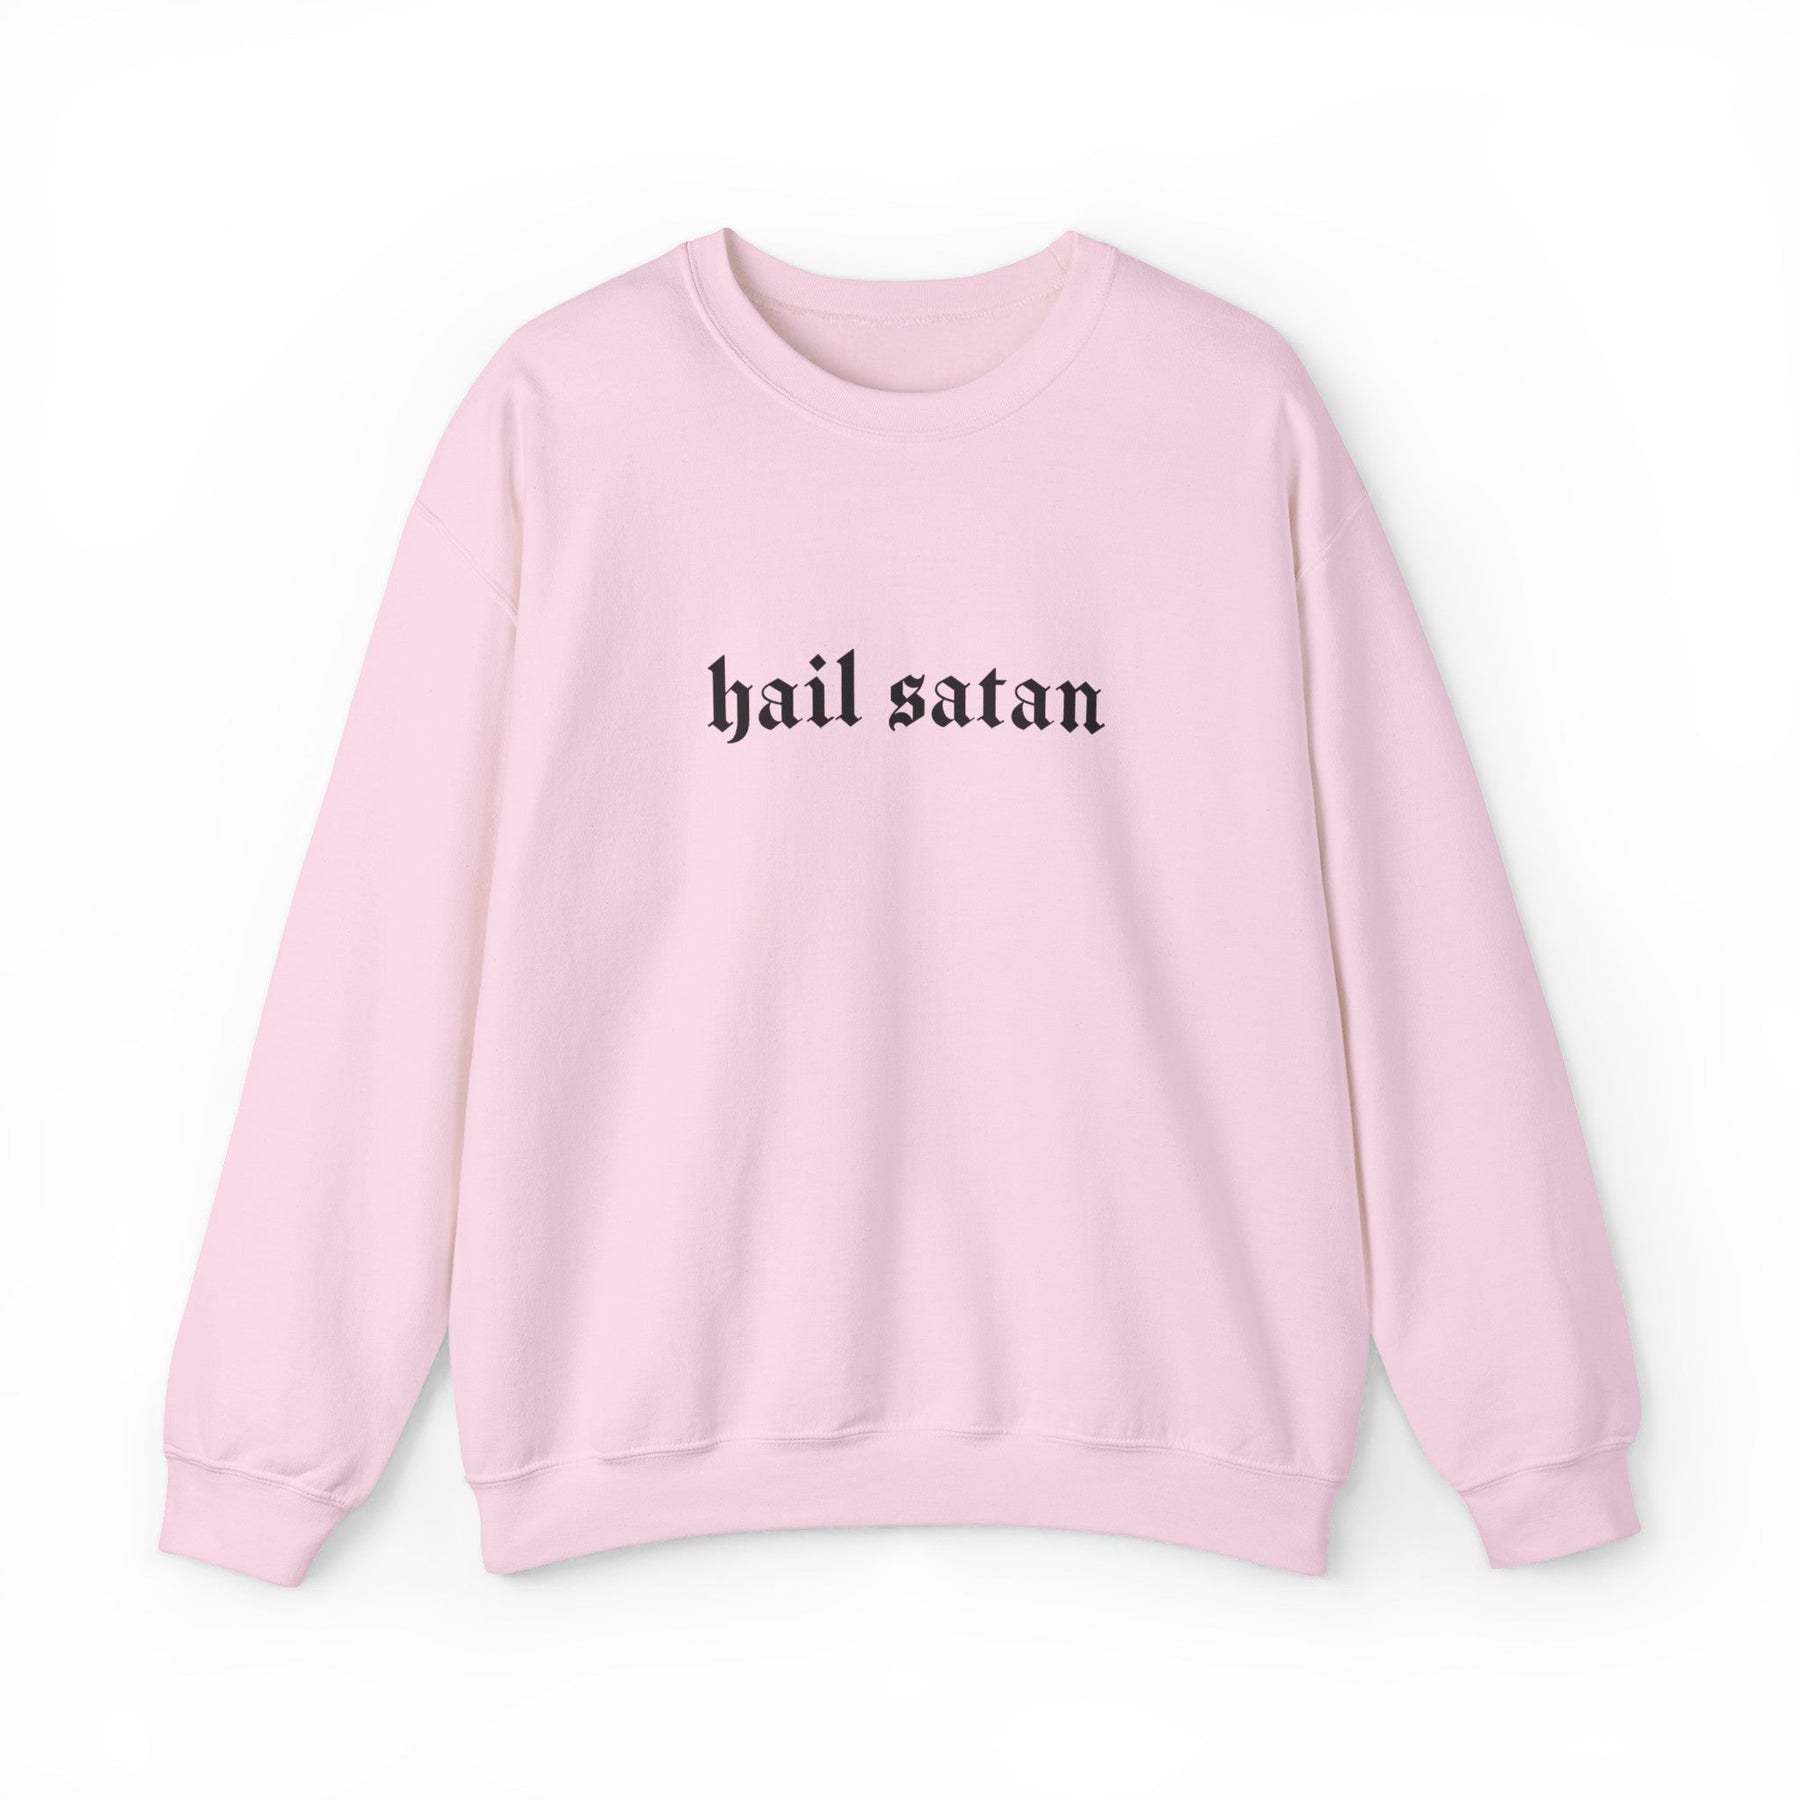 Hail Satan Goth Long Sleeve Crew Neck Sweatshirt - Goth Cloth Co.Sweatshirt32091790083149676963